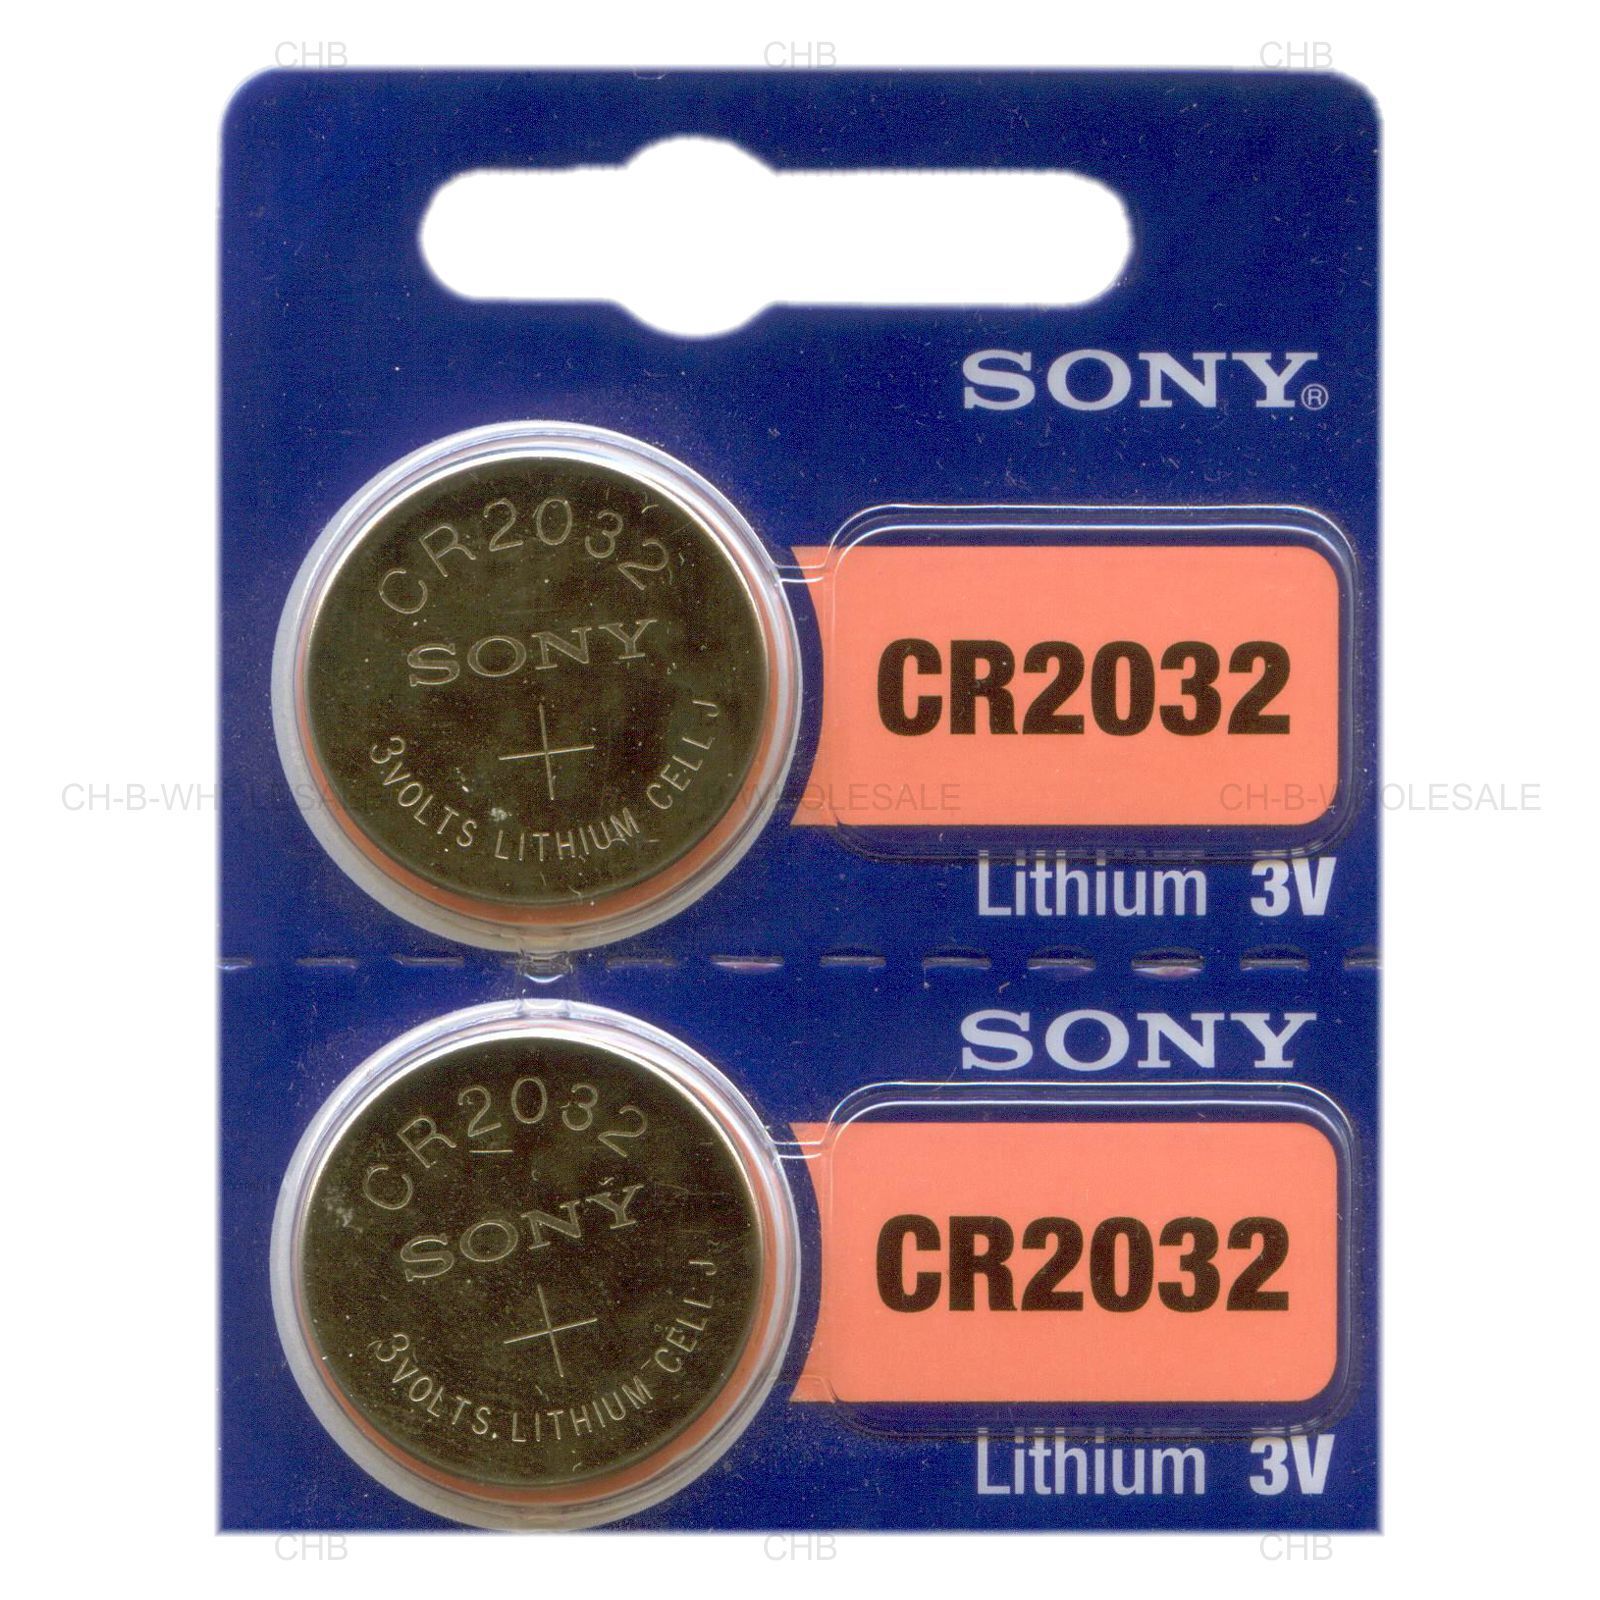 2 NEW SONY CR2032 3V Lithium Coin Battery Expire 2029 FRESHLY NEW - USA Seller Sony SONY-CR2032